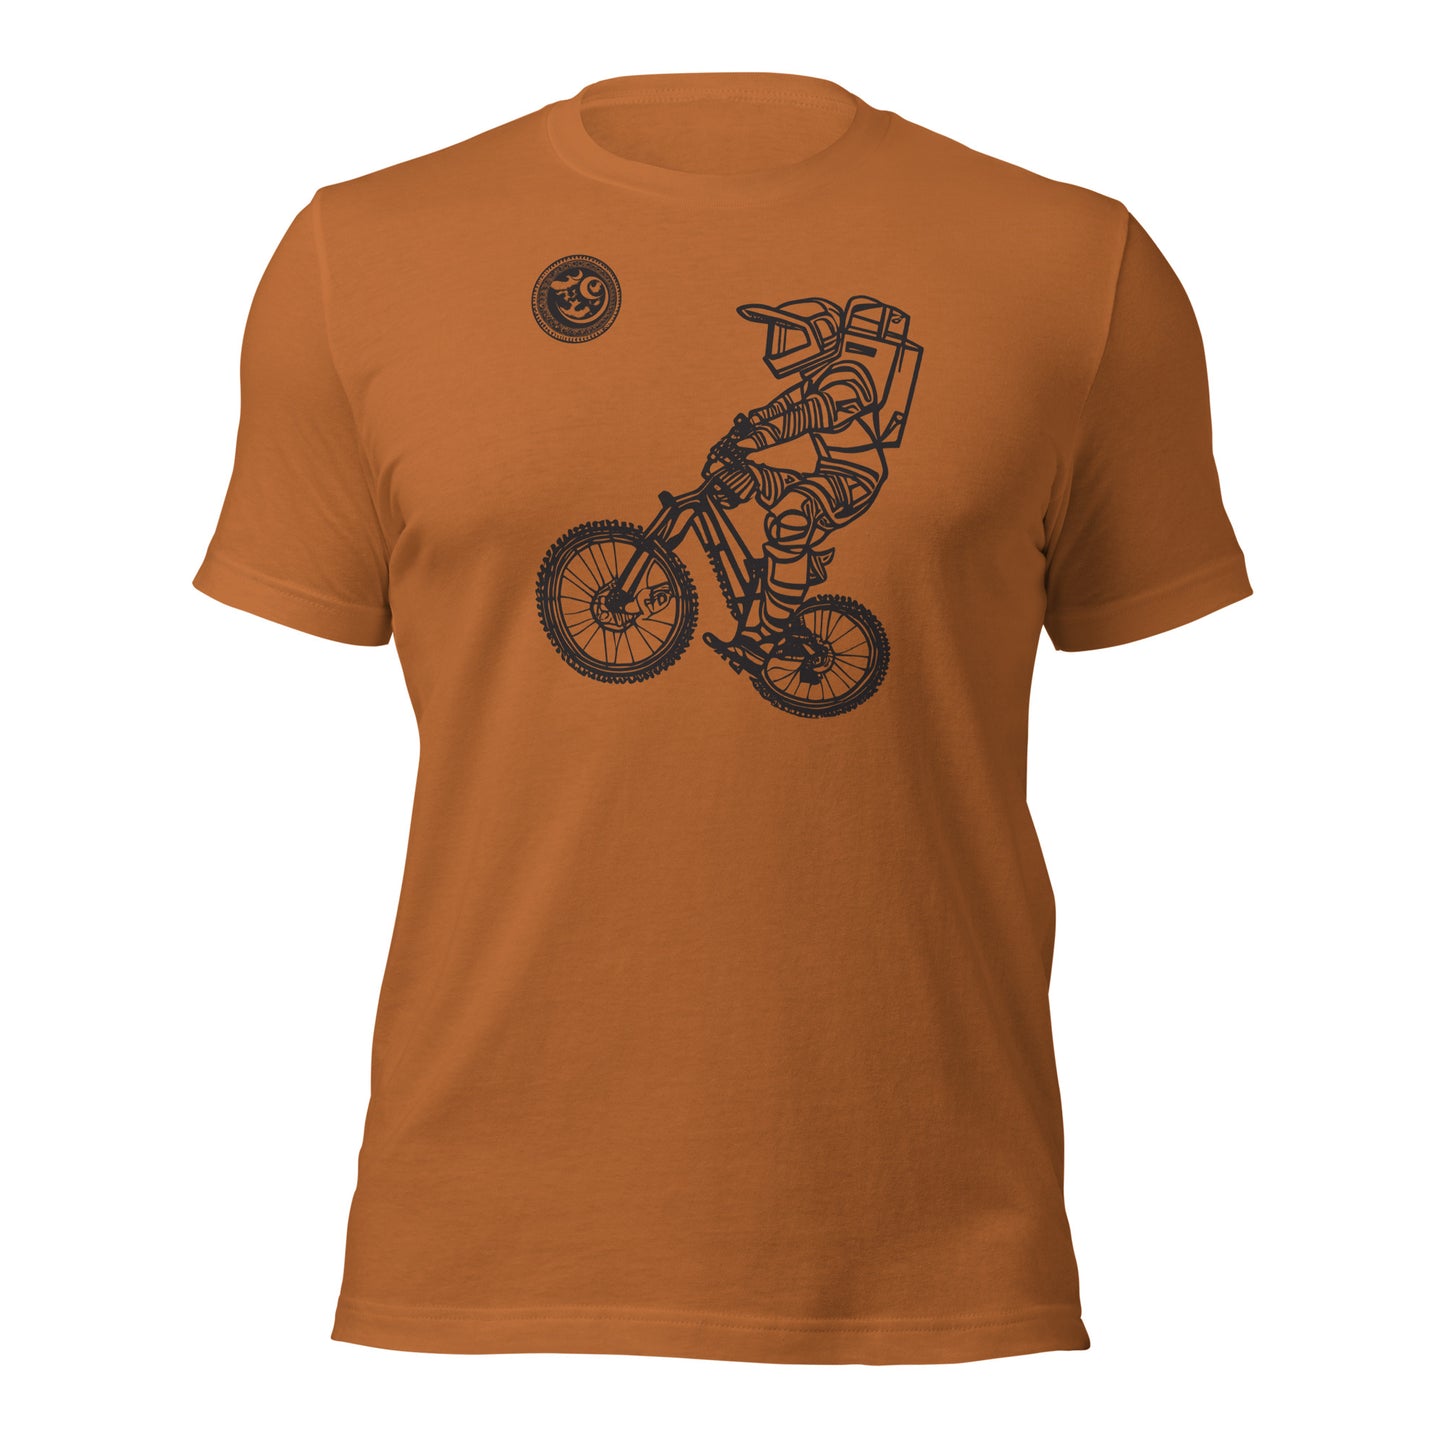 Bike This T-Shirt